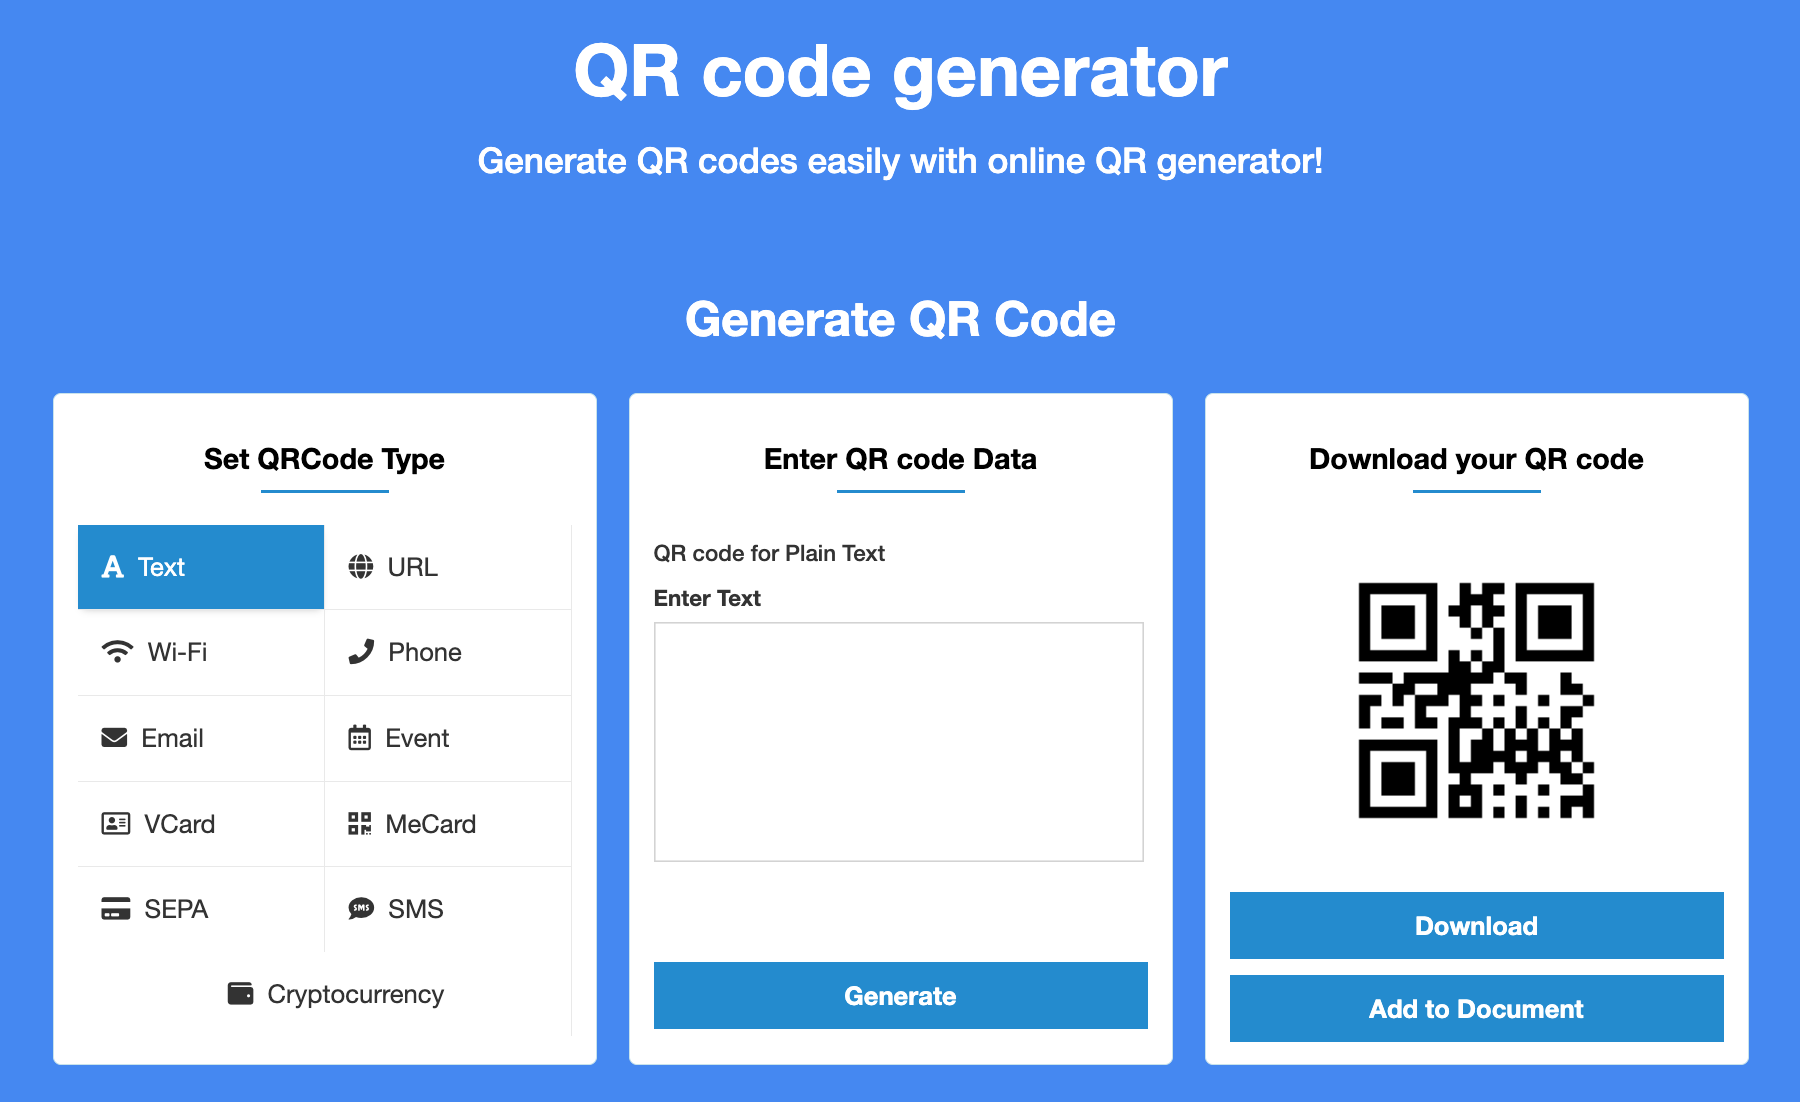 App per la generazione di codici QR online